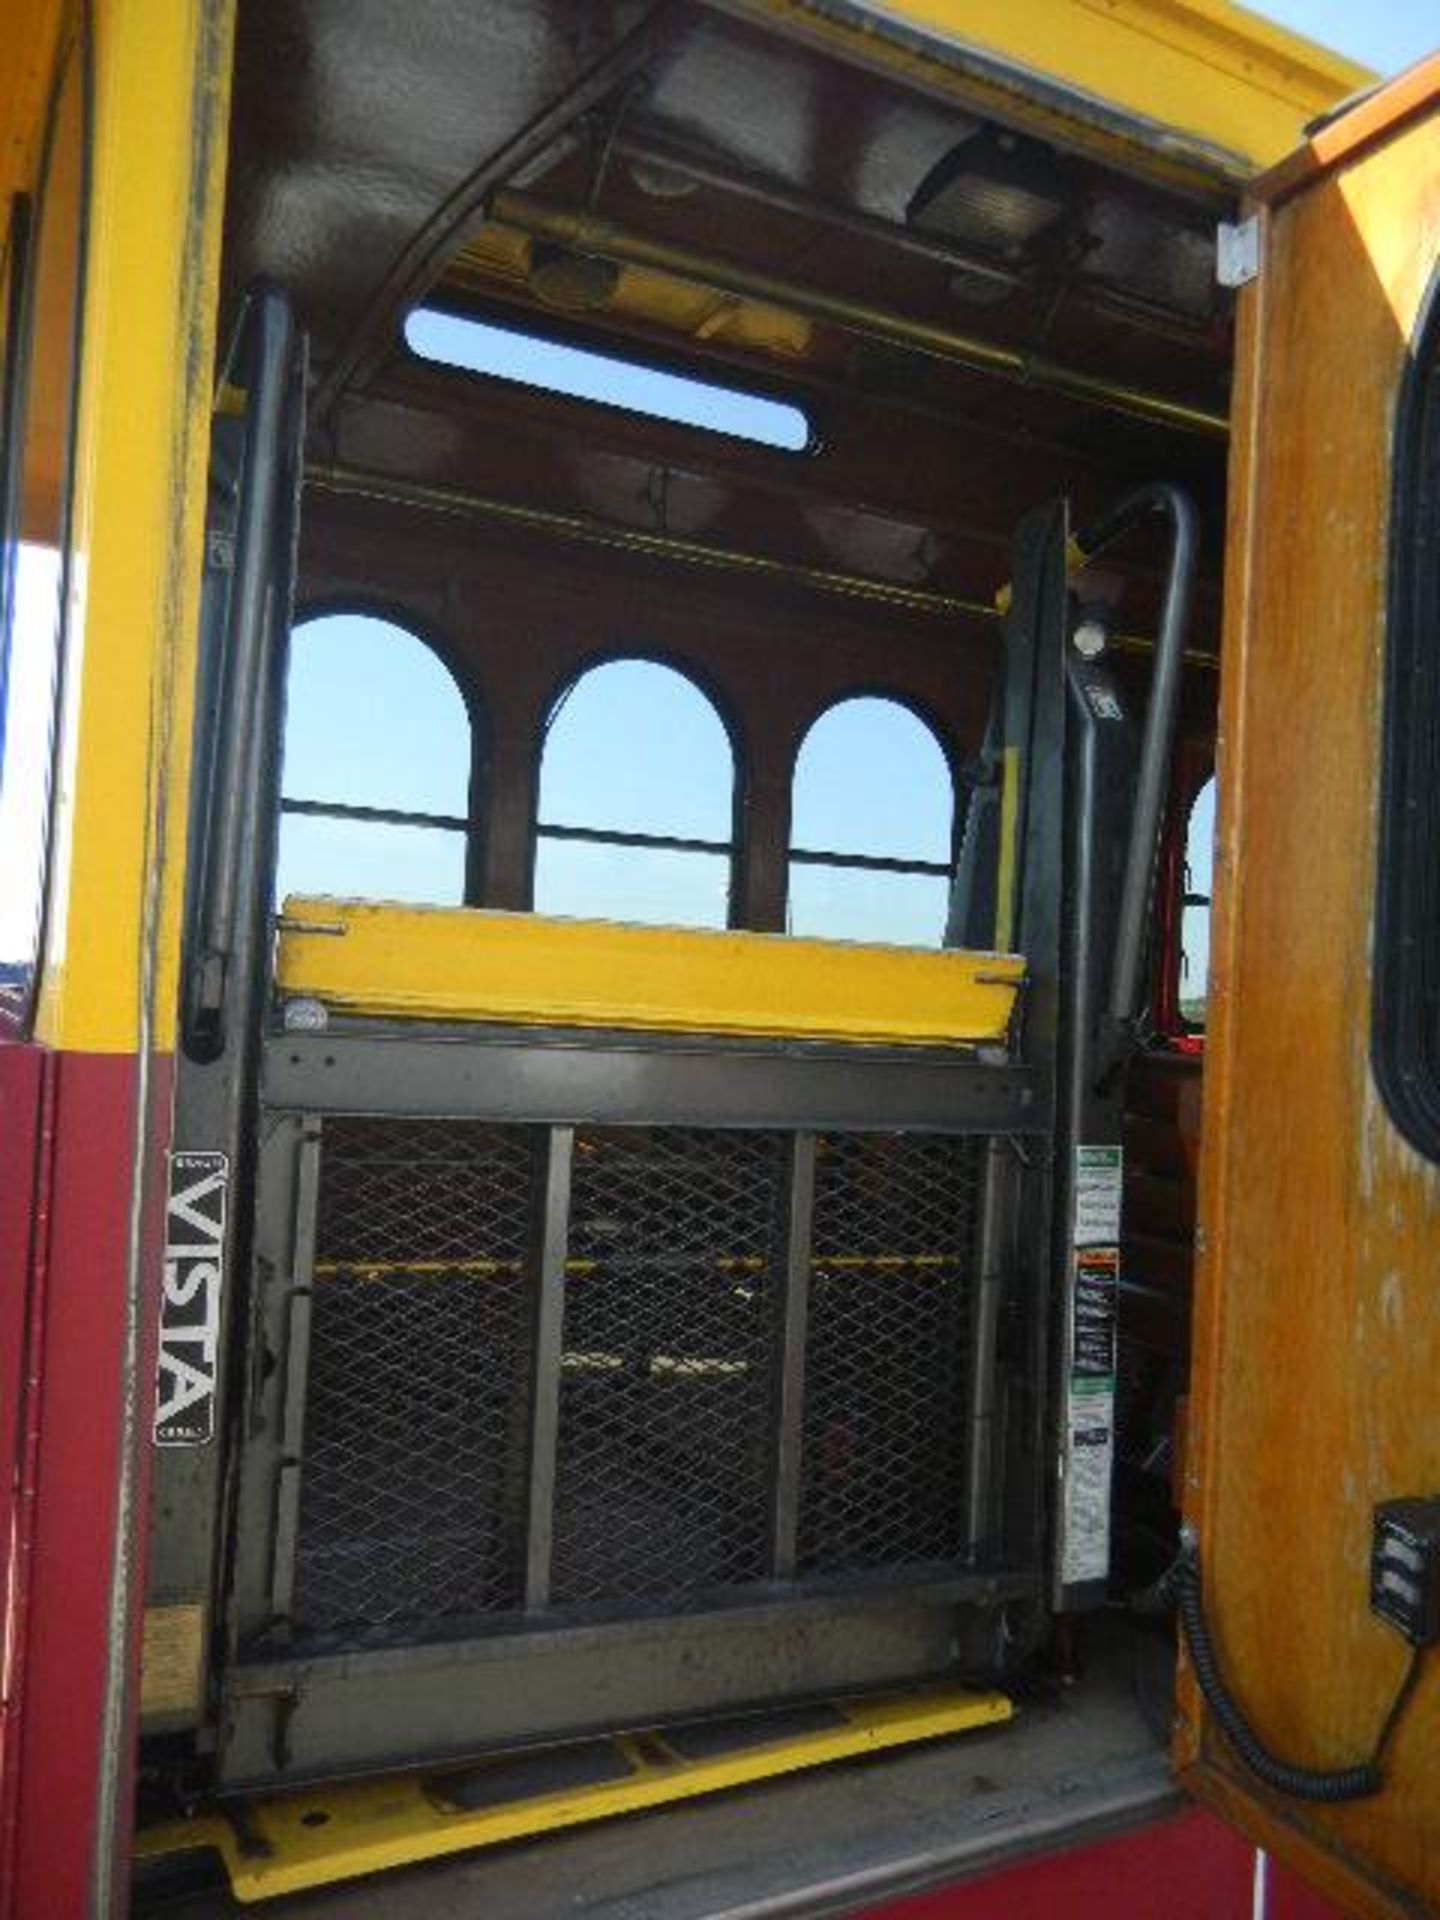 Trolley Bus - Asset I.D. #659 - Last of Vin (T2112598) - Freightliner Chassis - Cummins Diesel - Image 6 of 10